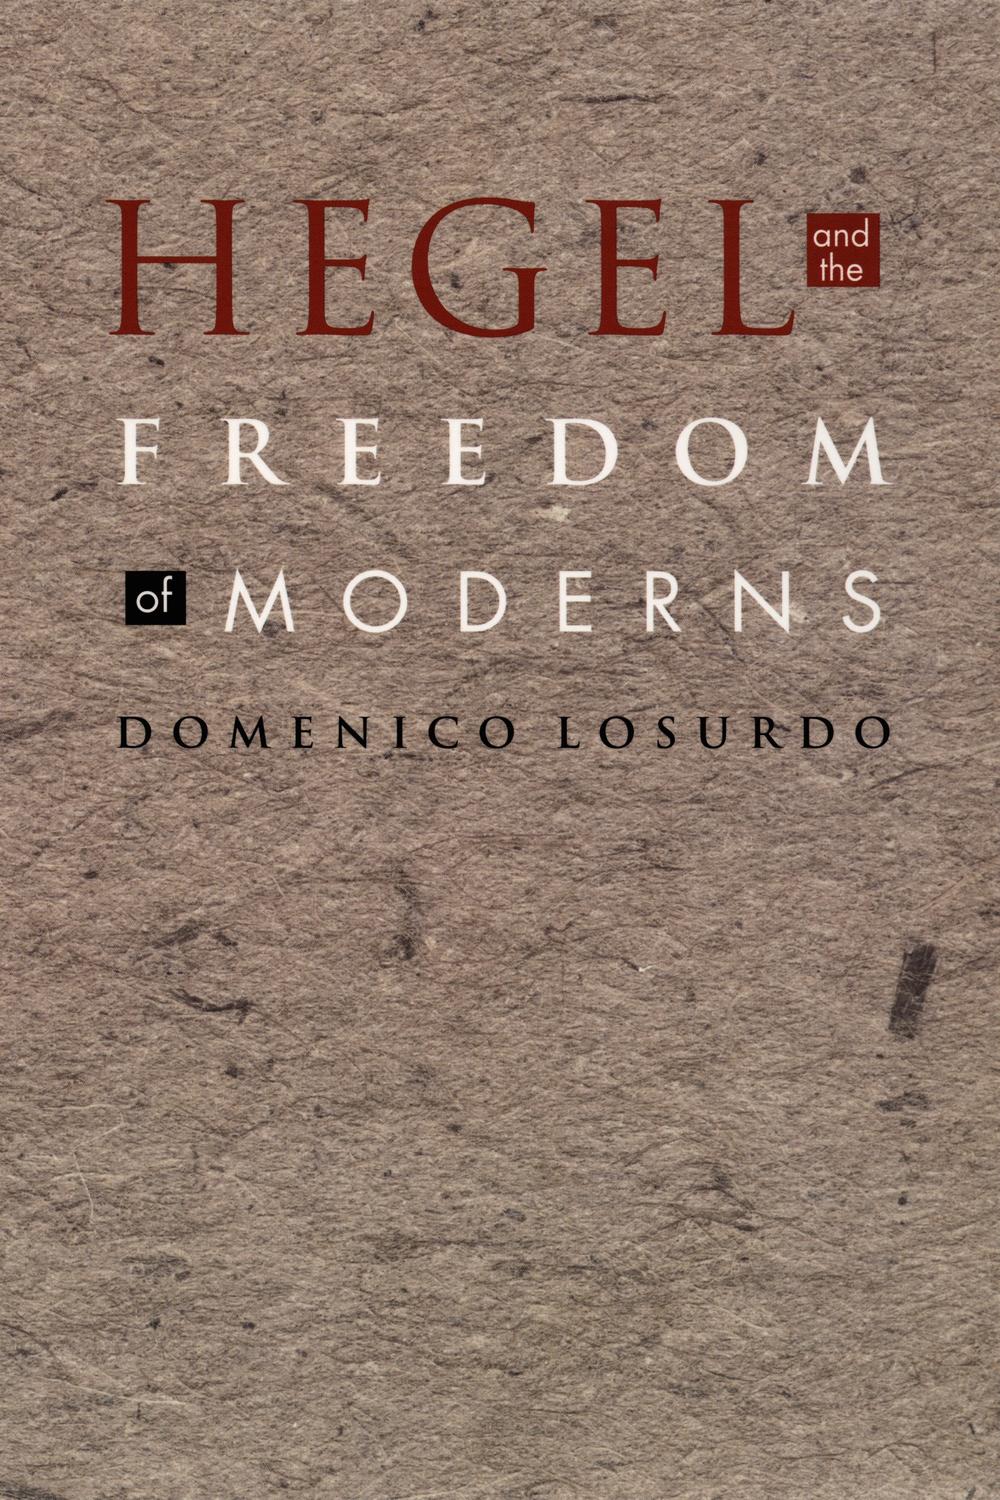 Hegel and the Freedom of Moderns - Domenico Losurdo